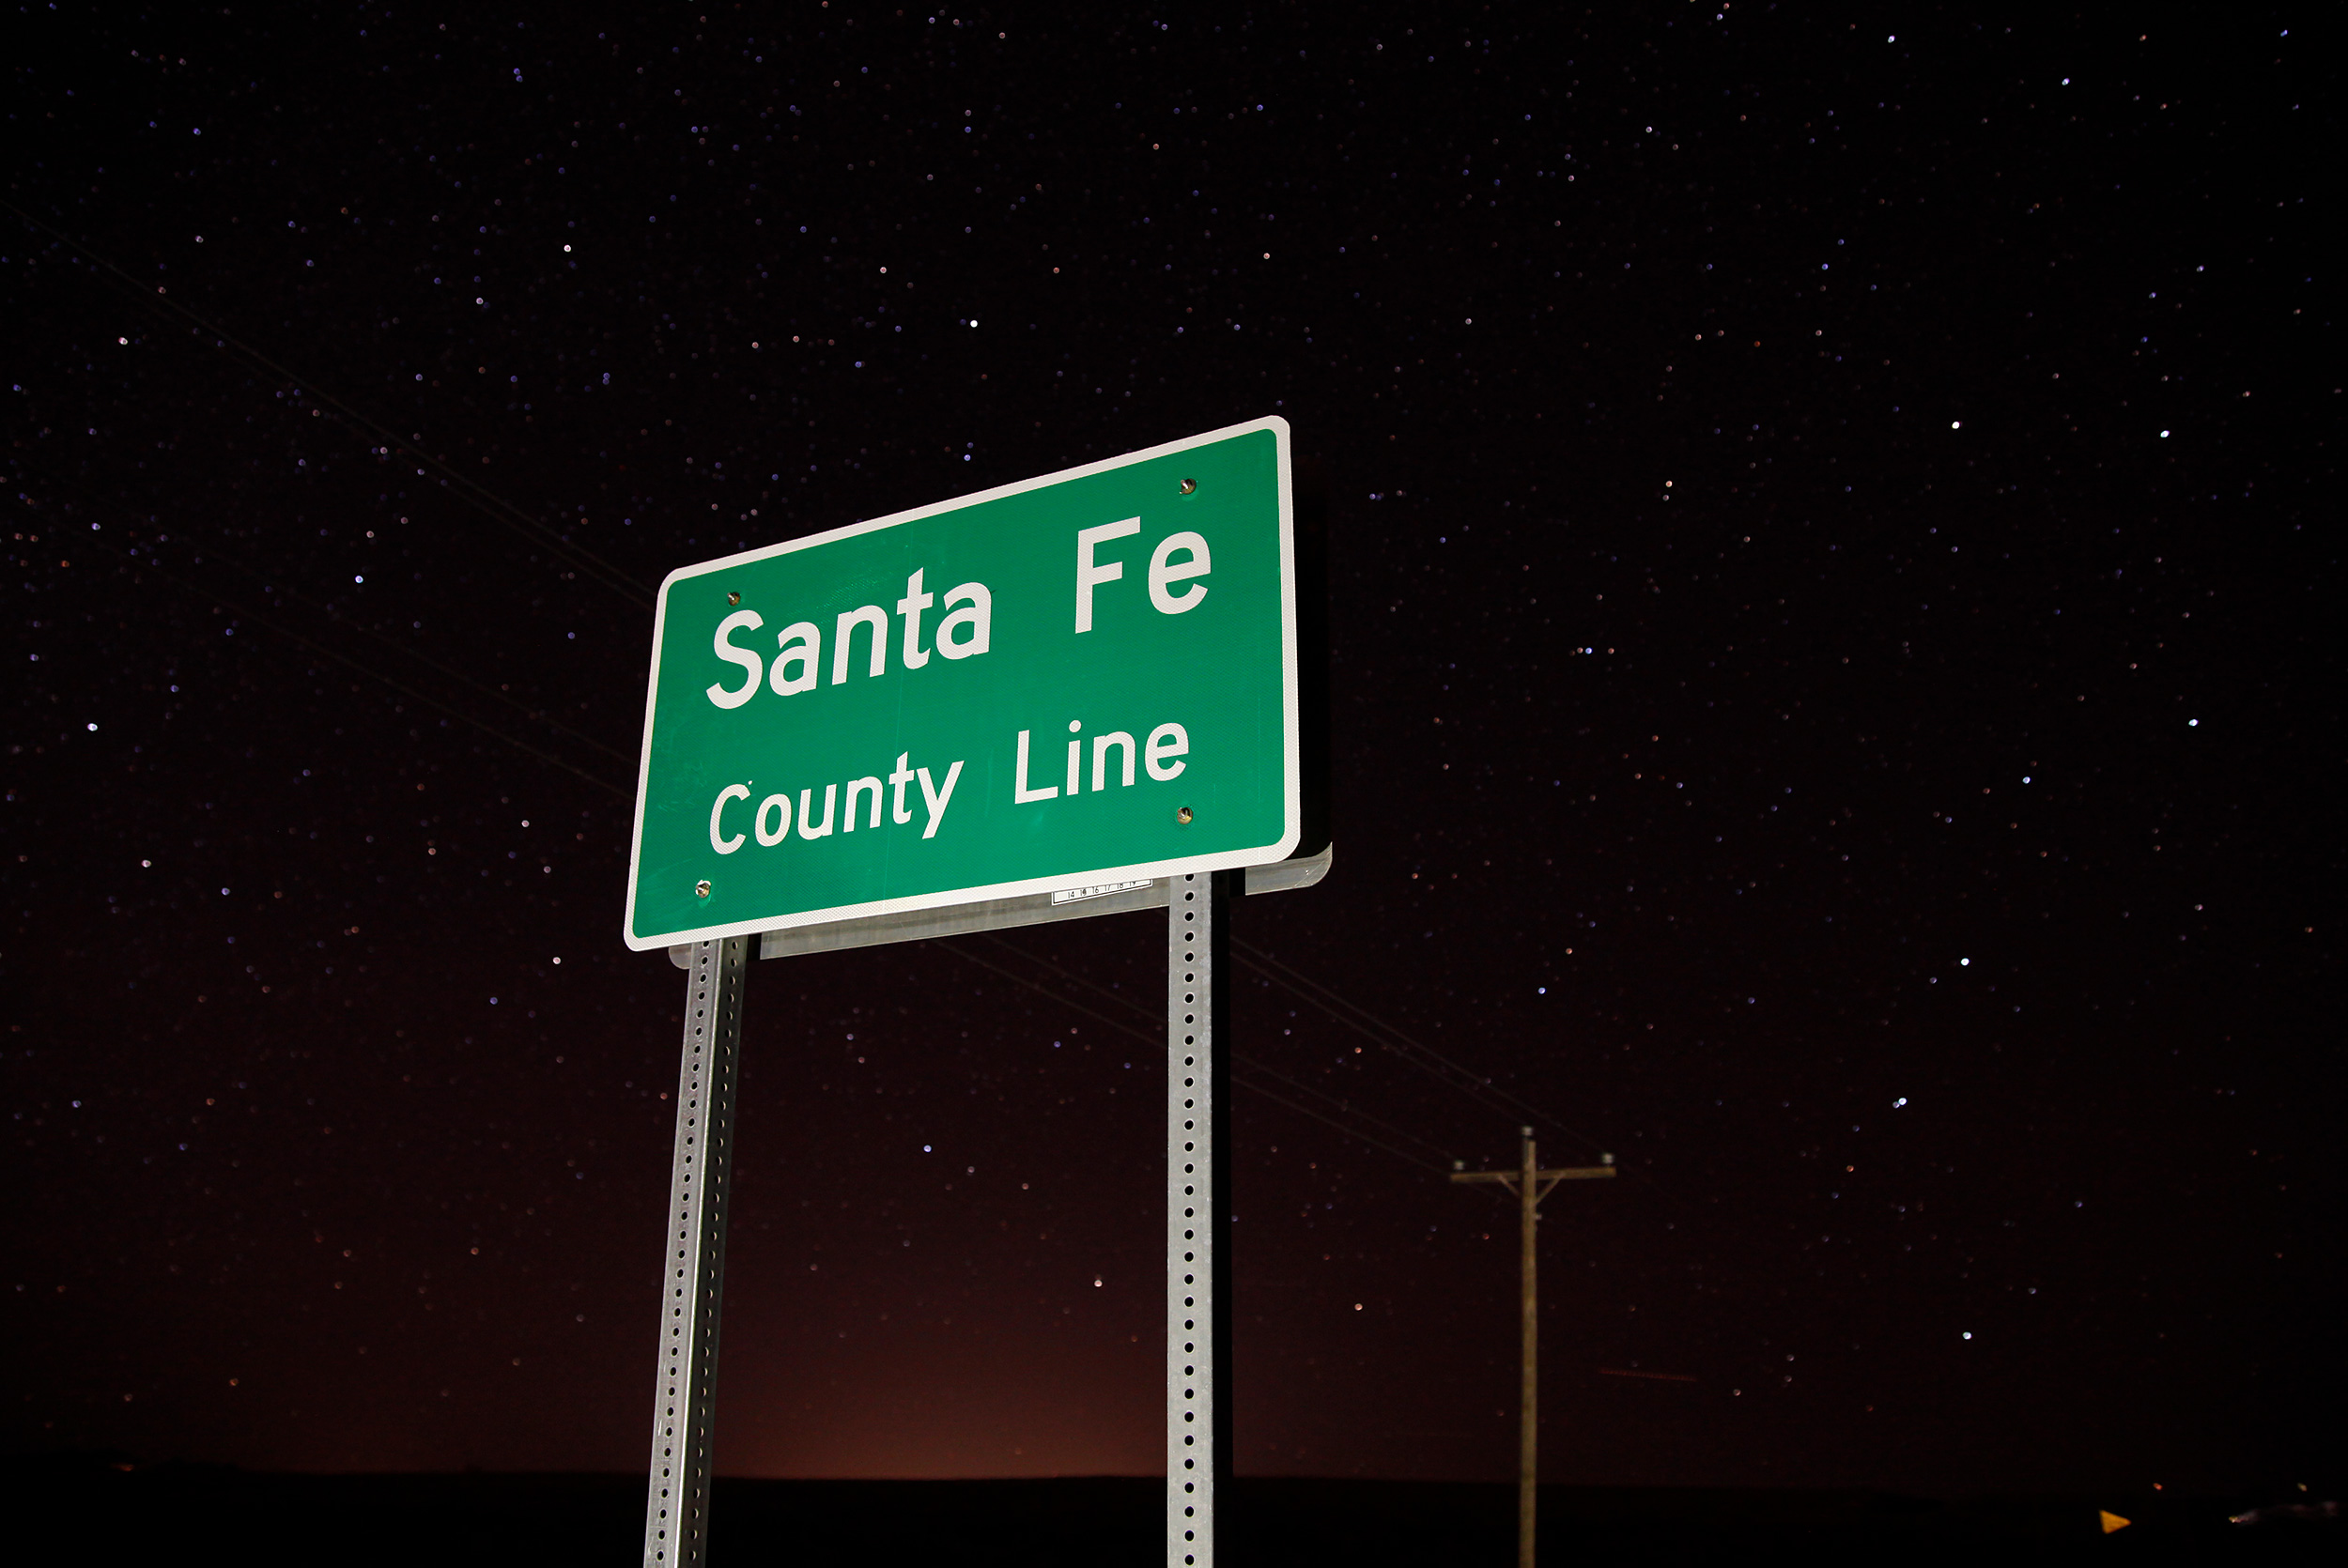 Sante Fe, New Mexico - Steve Craft Photography - Phoenix Arizona Travel Photographer